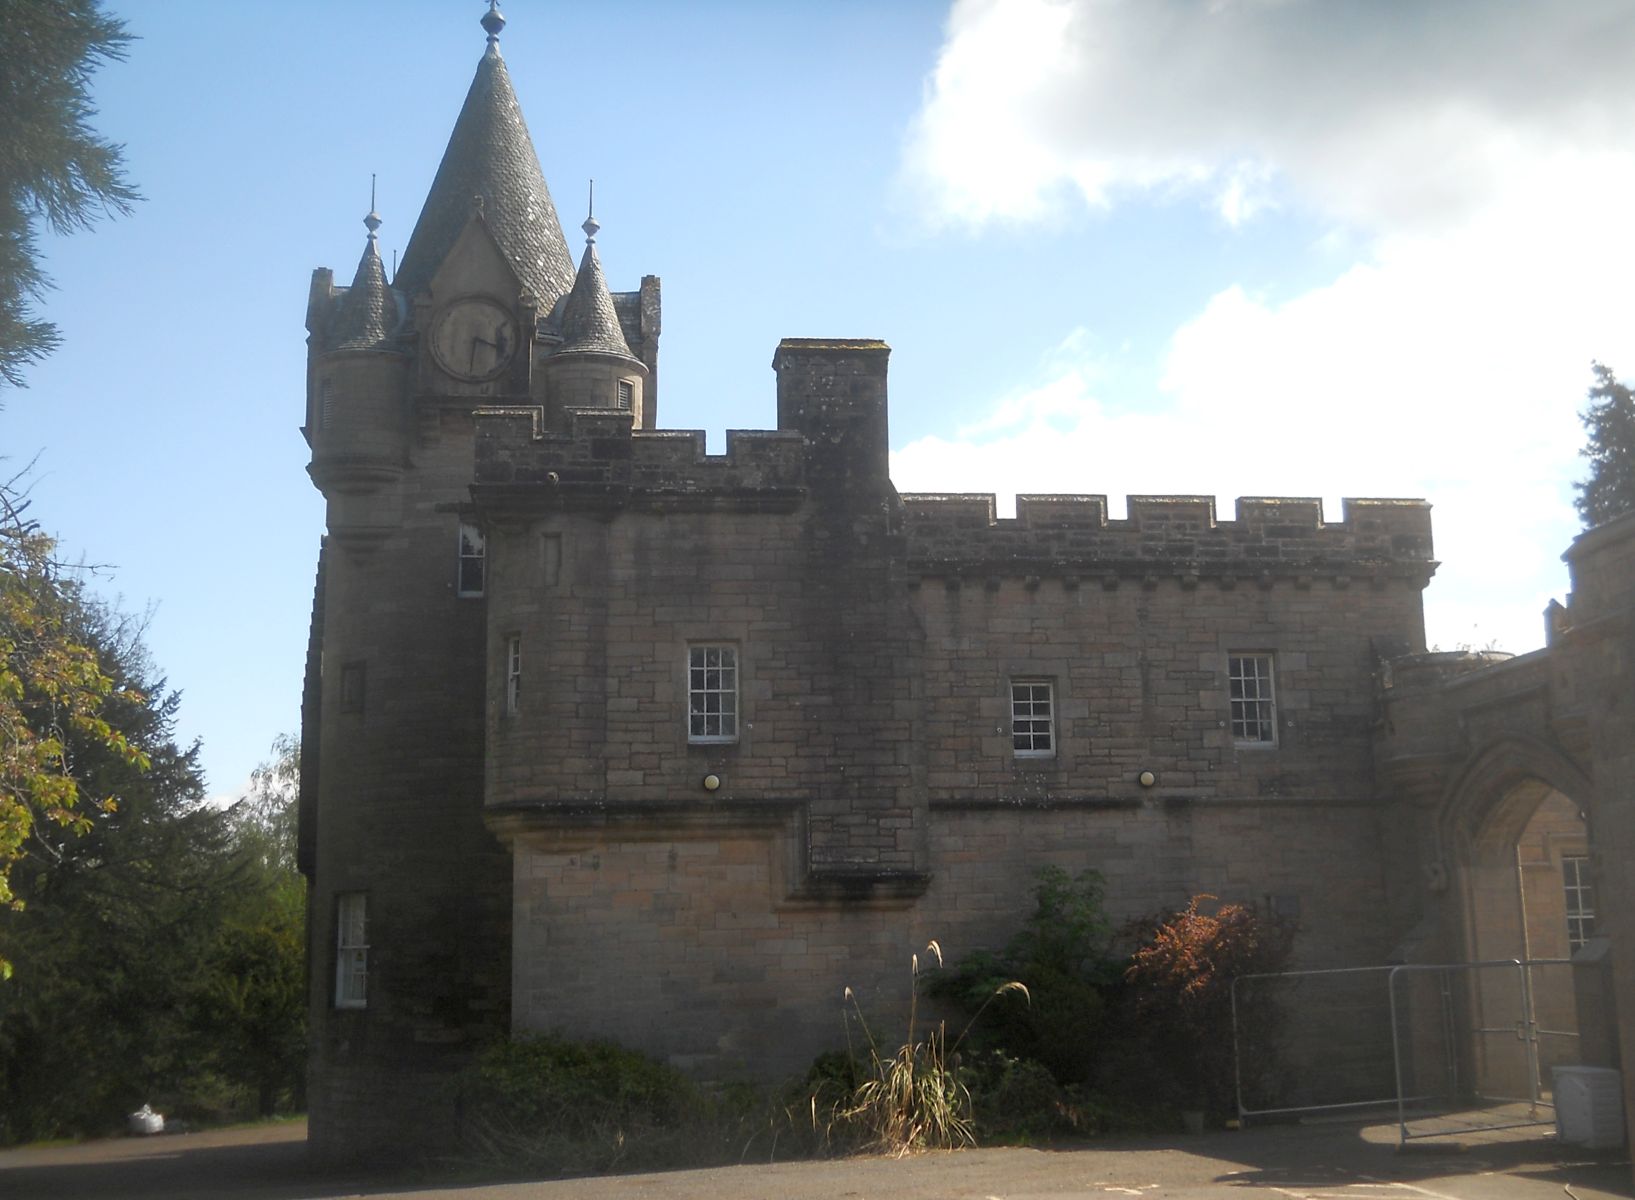 Ballikinrain Castle